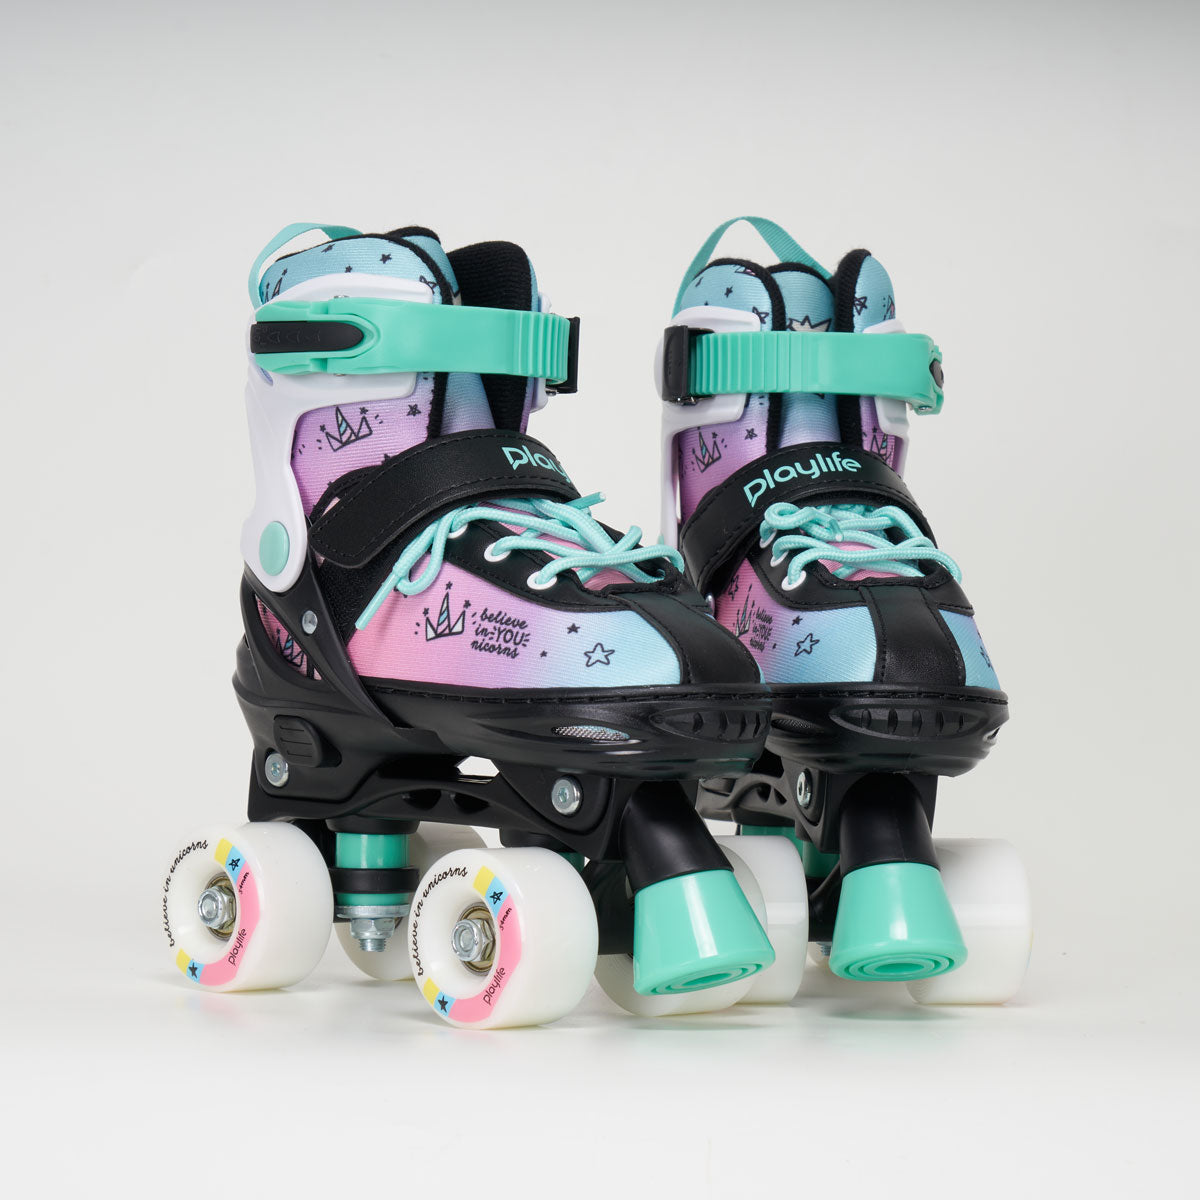 Playlife Unicorn Junior Adjustable Skates - Summer Dusk